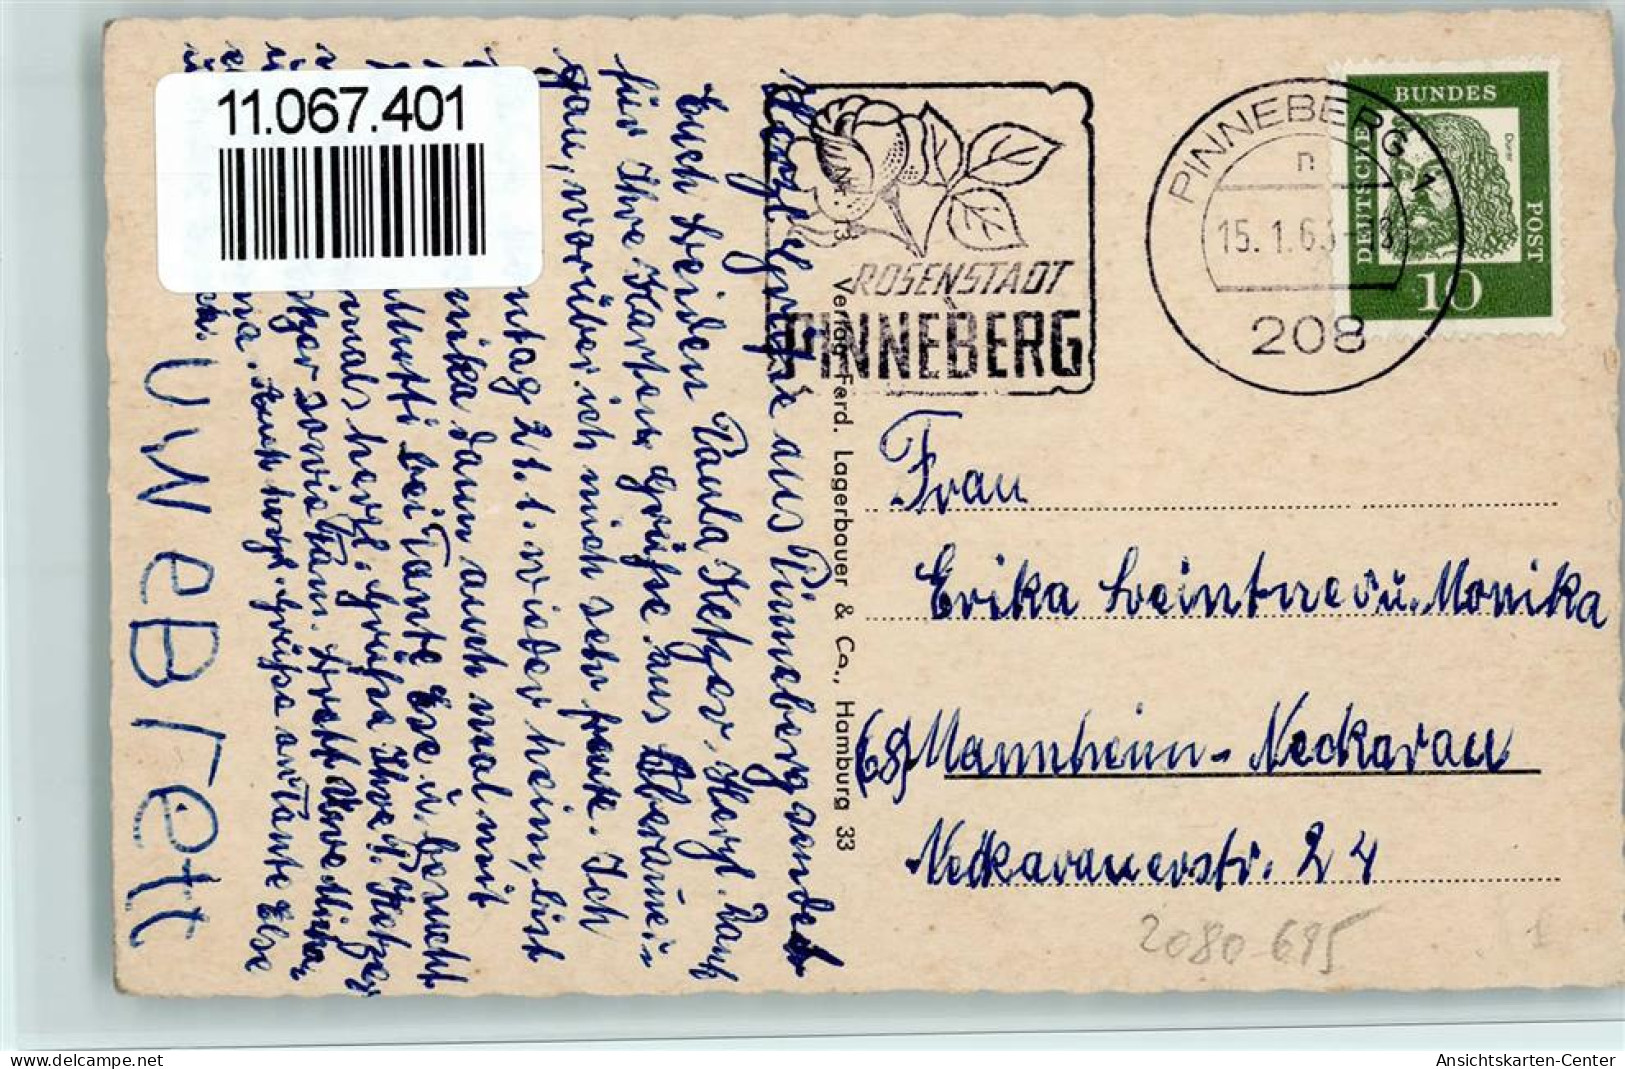 11067401 - Pinneberg - Pinneberg